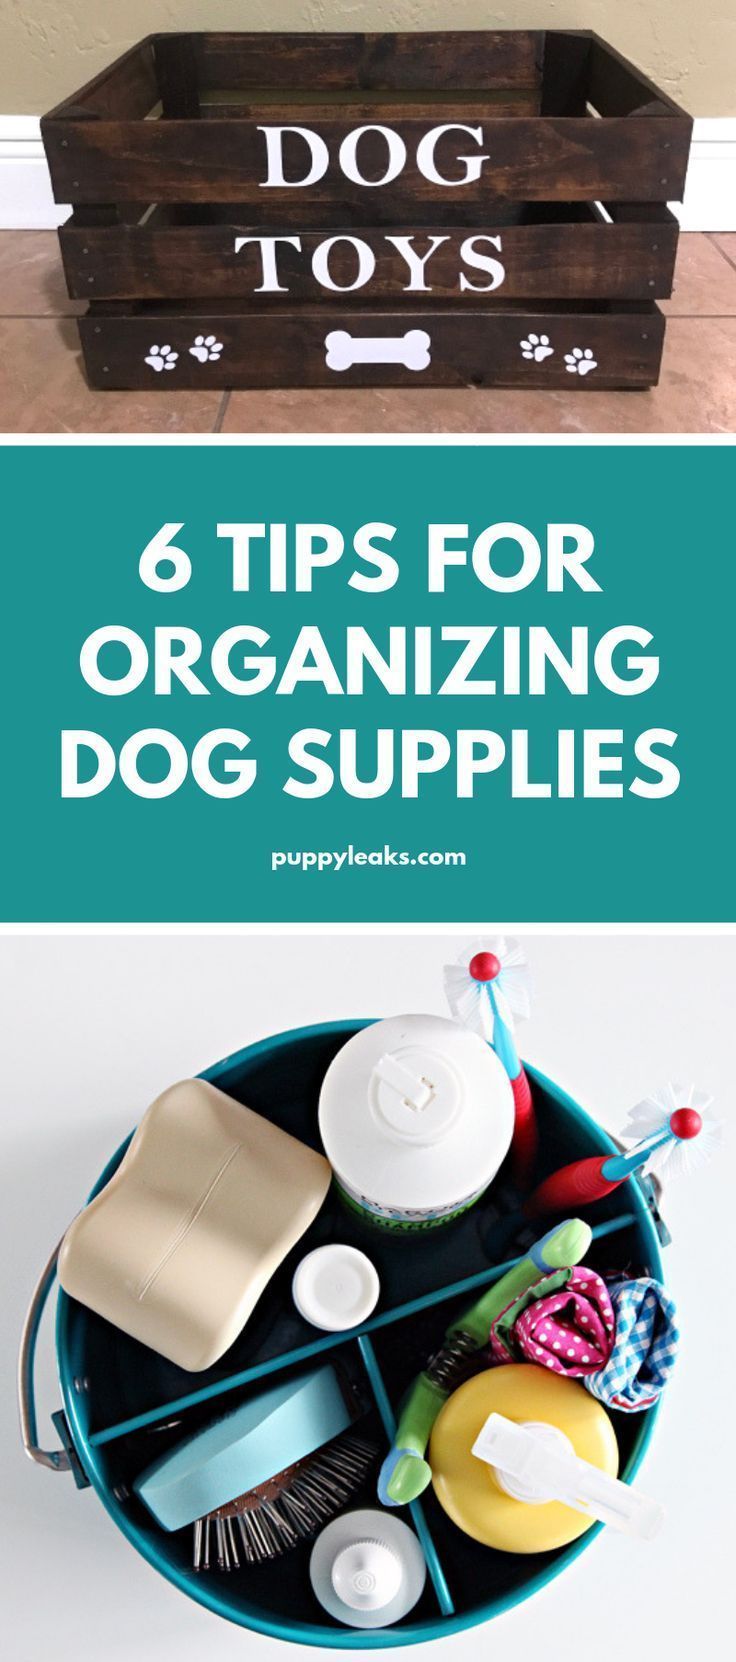 Tips For Organizing Your Dog Supplies - Puppy Leaks - Tips For Organizing Your Dog Supplies - Puppy Leaks -   19 diy Dog organization ideas